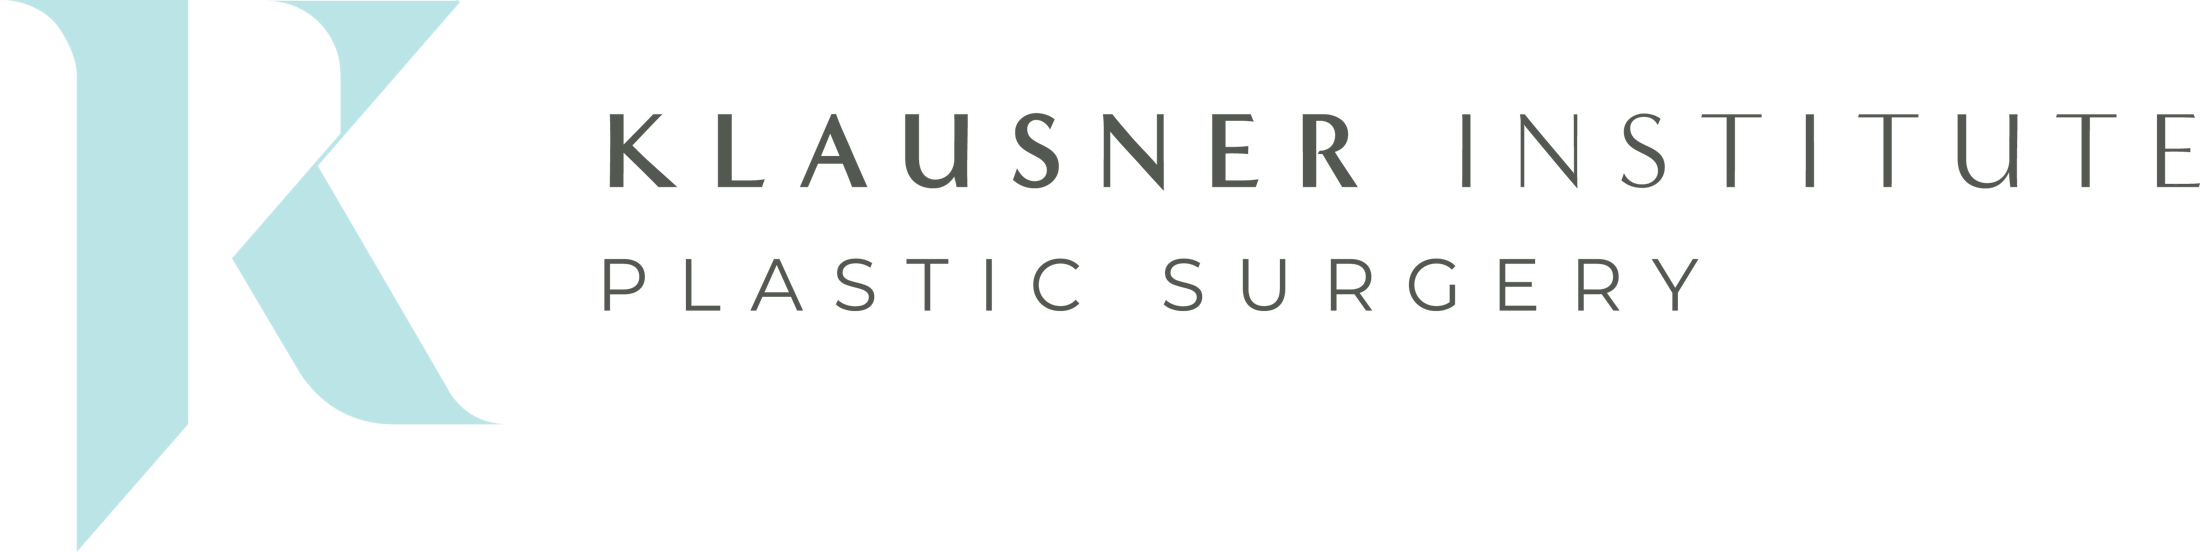 Klausner Institute Website Logo